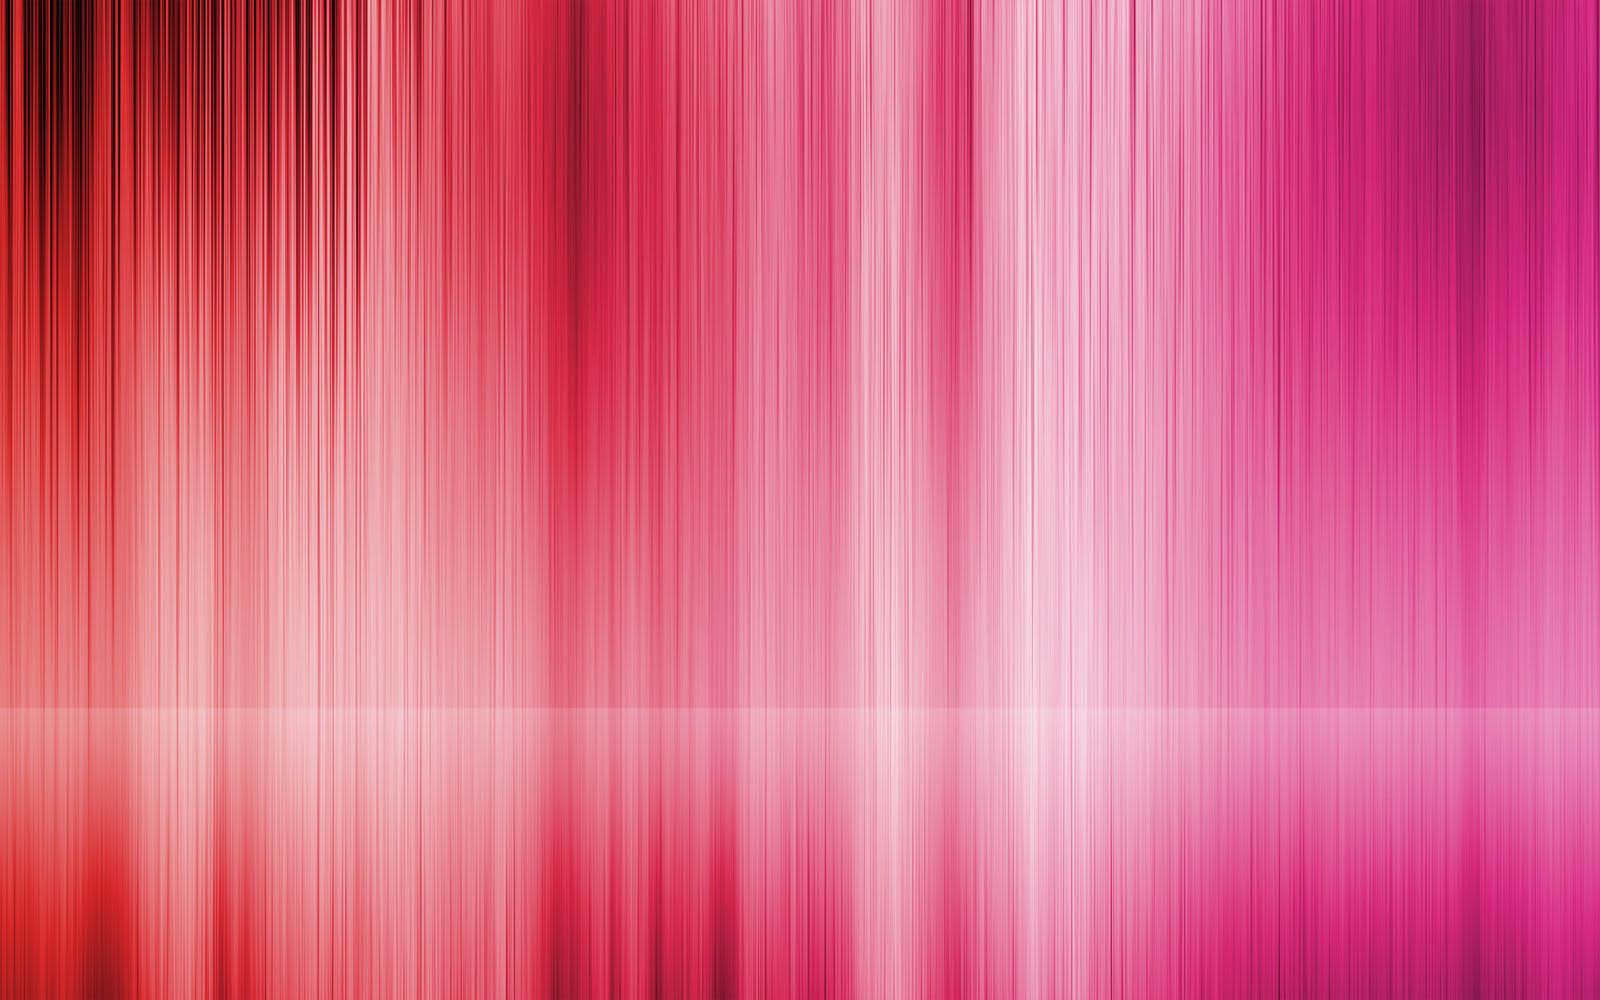 Gallery Mangklex: HOT 2013 Popular Abstract Pink Wallpaper